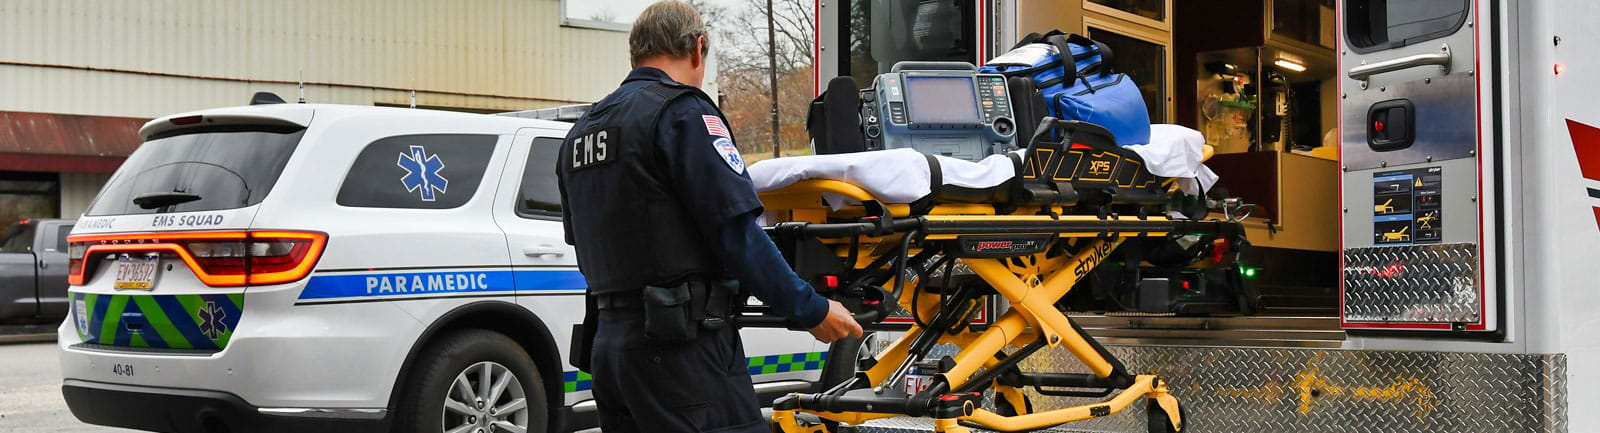 ems-hero-ambulance